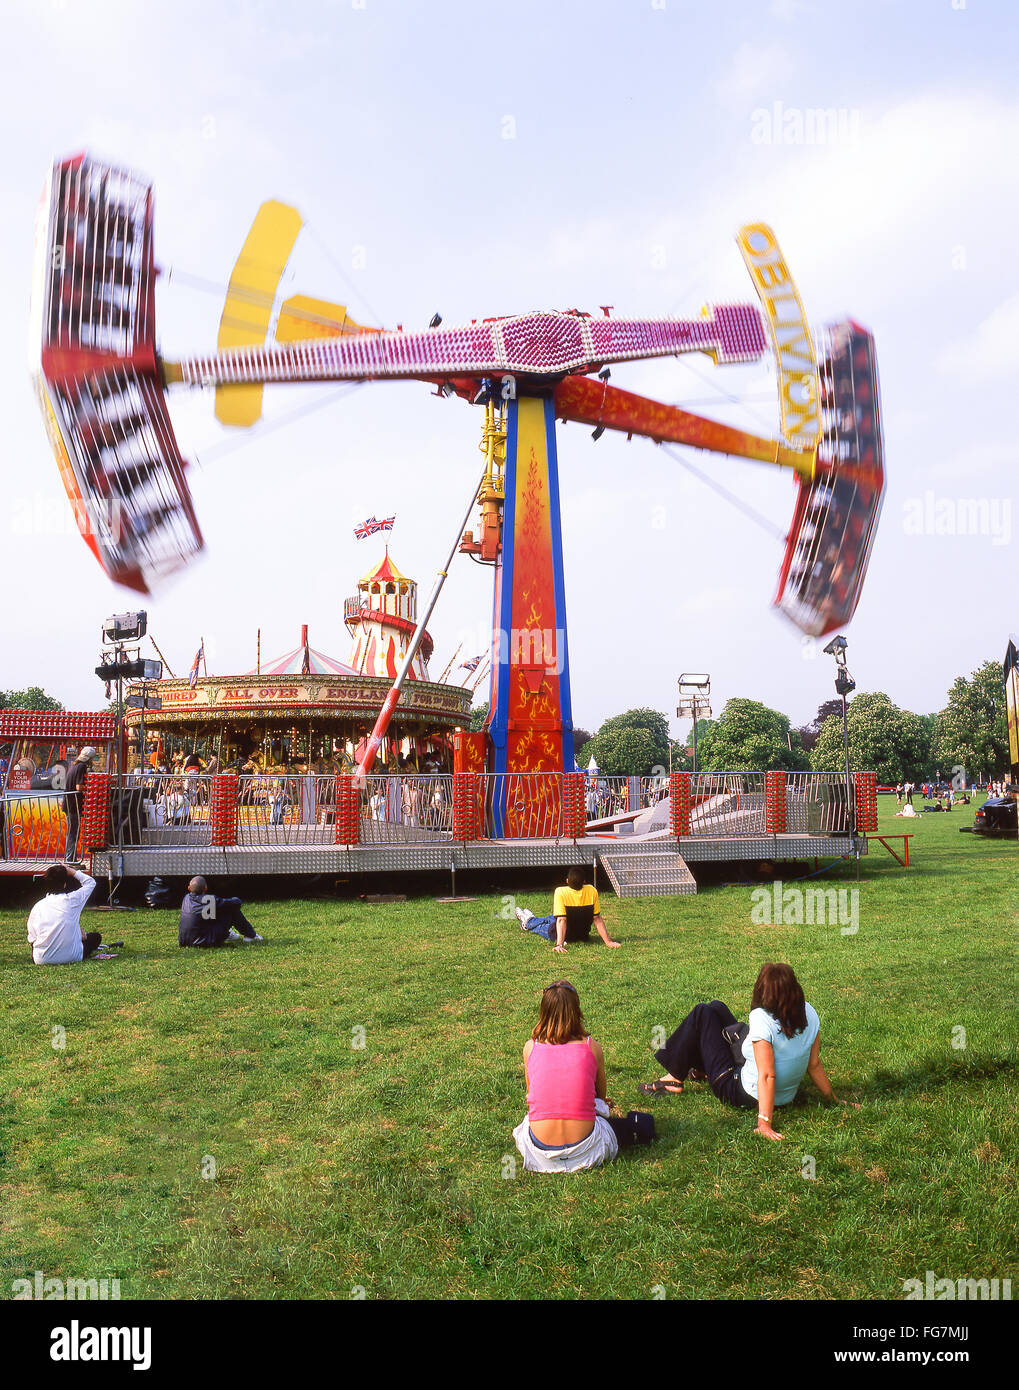 Parco di divertimenti su Ealing Common, Ealing, London Borough of Ealing, Greater London, England, Regno Unito Foto Stock